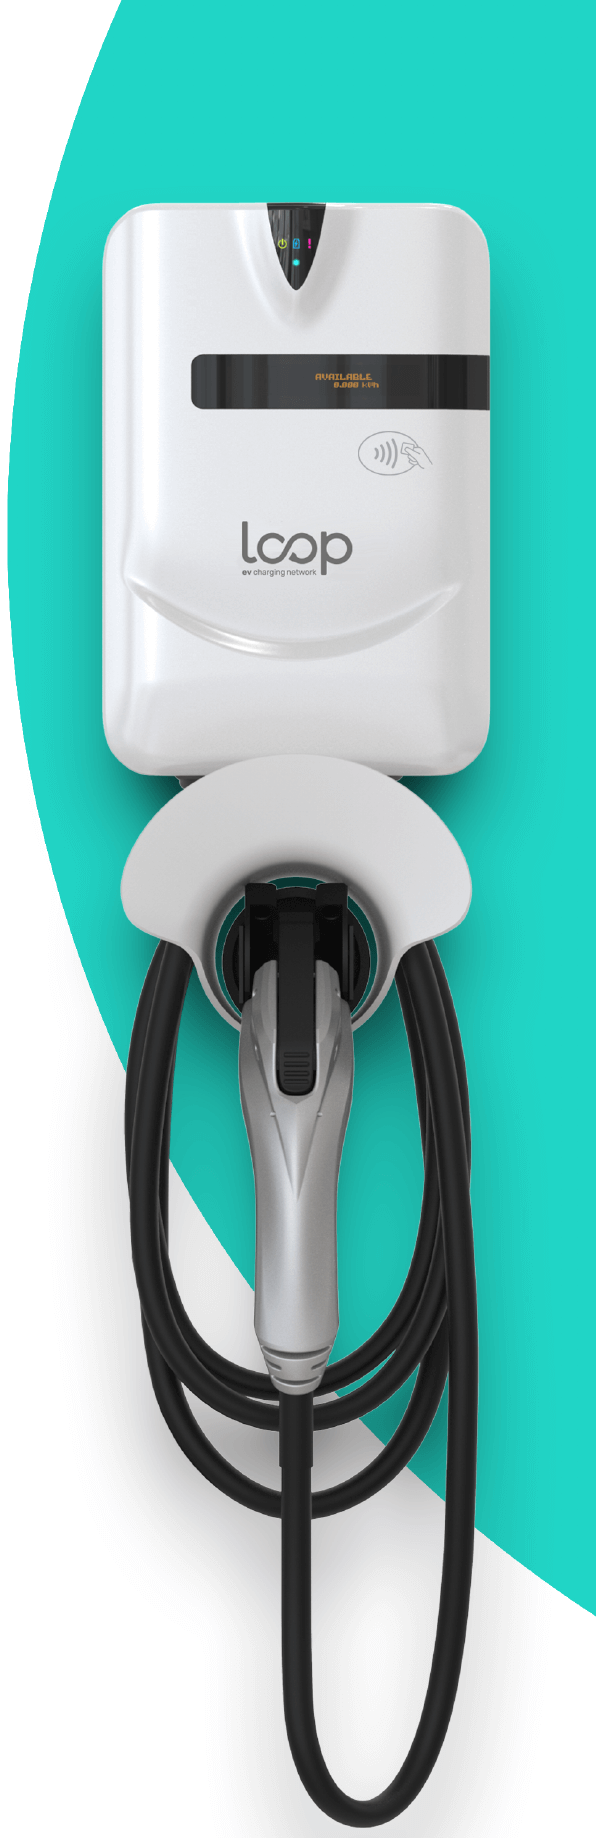 ev-flex-lite-loop-ev-charger-commercial-home-charging-station-electric-vehicle-optimum-energy-services